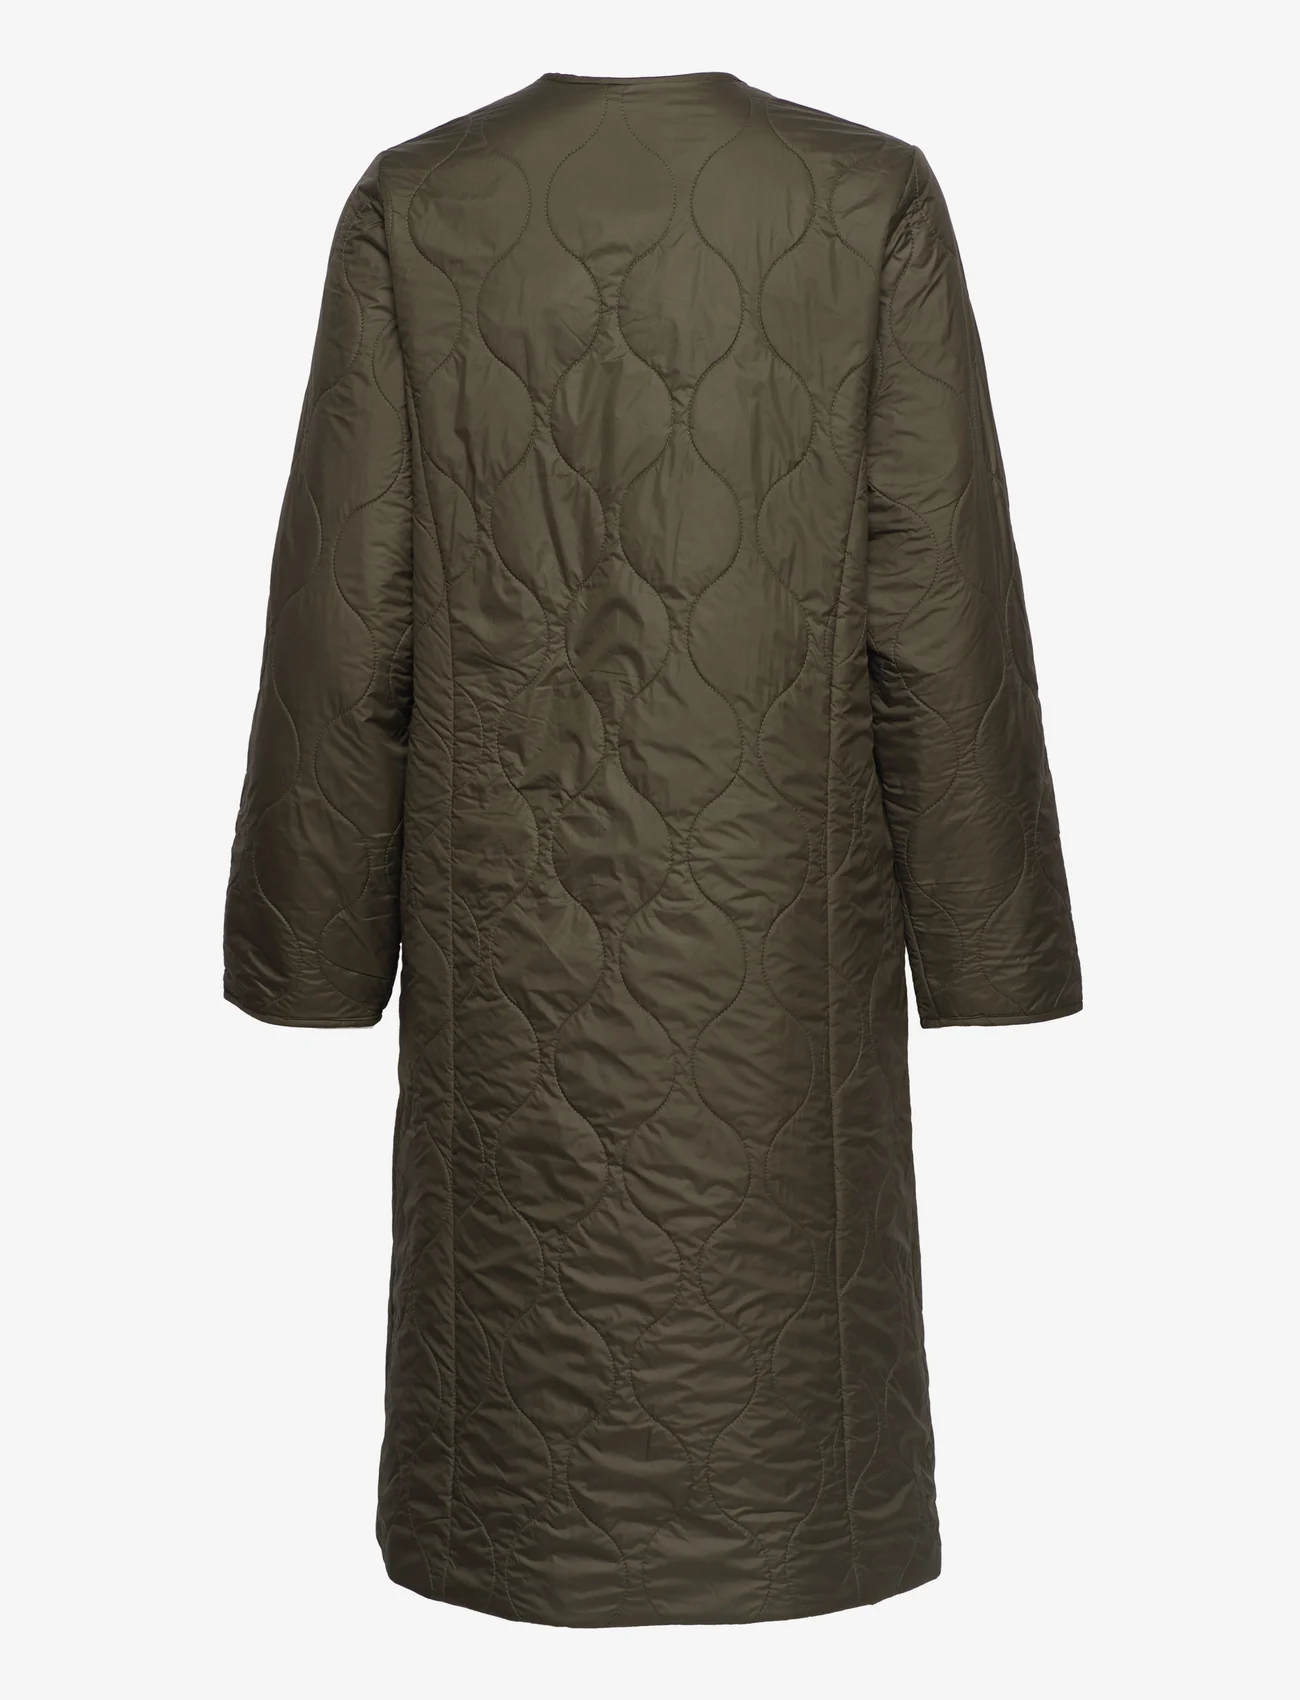 Rosemunde - Recycle polyester coat - spring jackets - olive night - 1